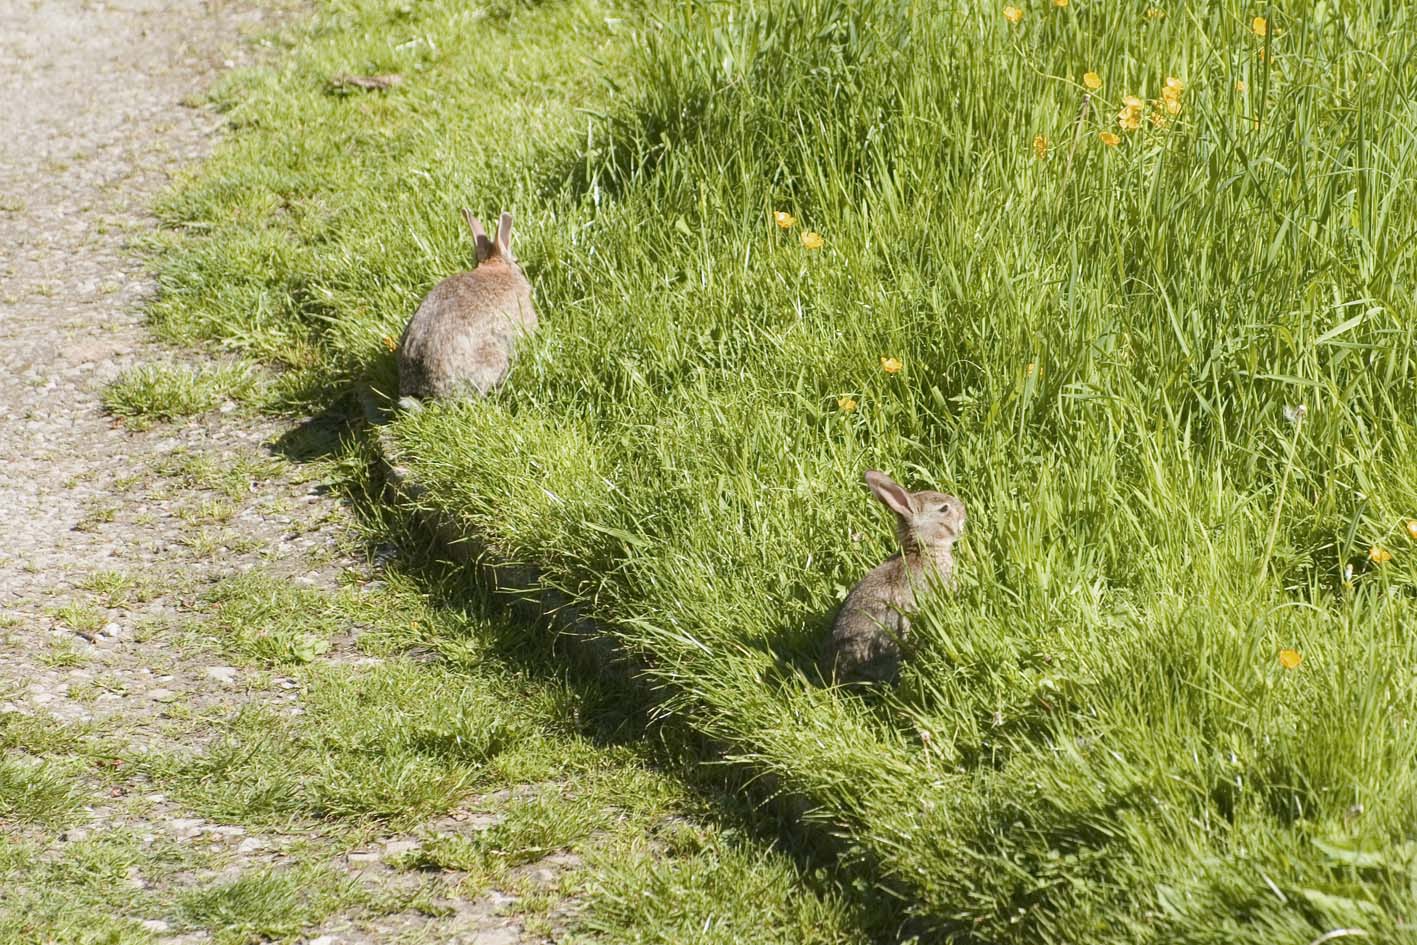 Baby rabbit eating grass